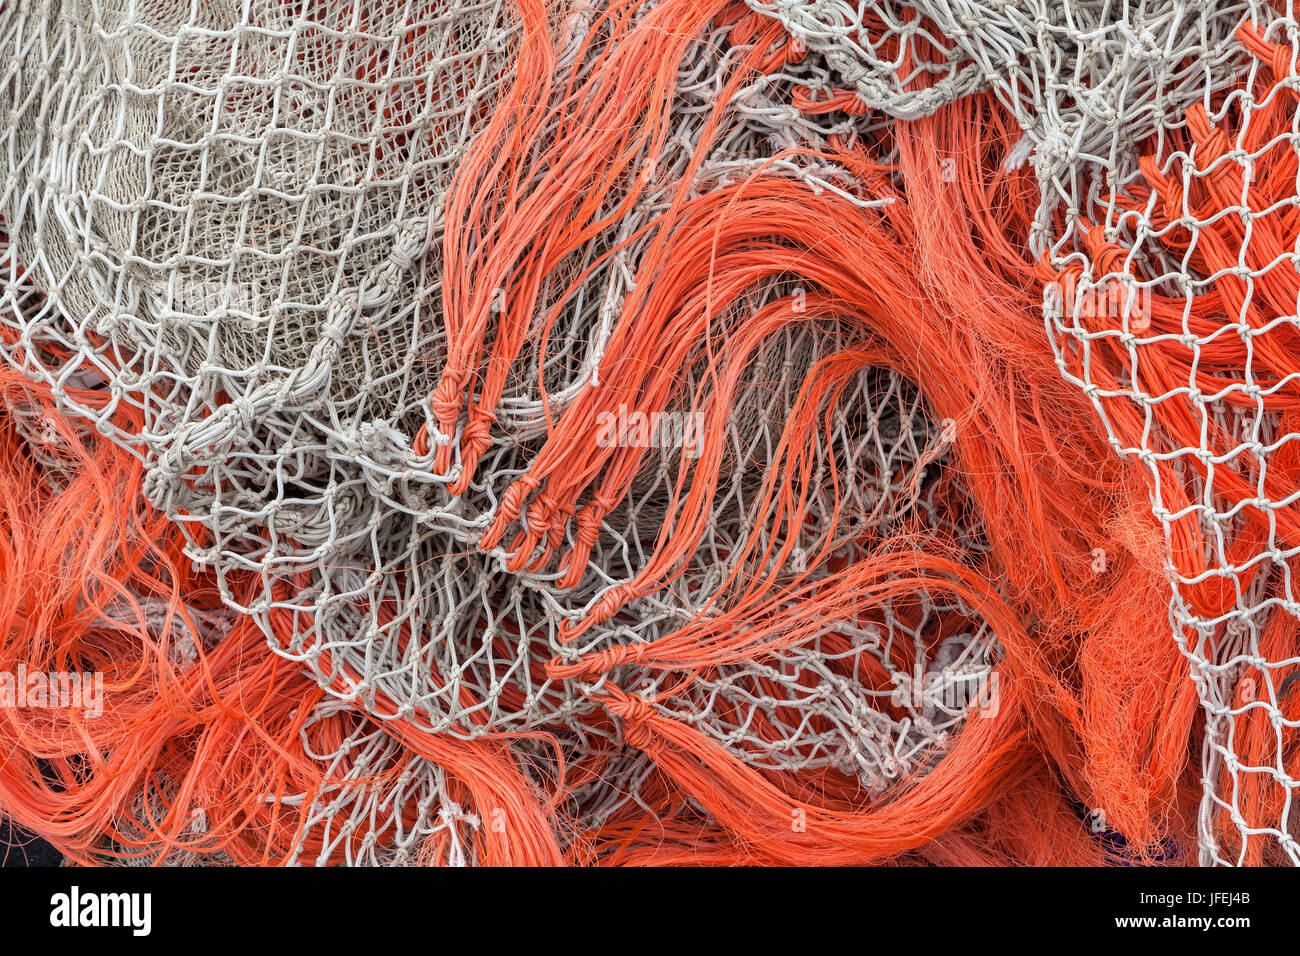 nets of the fishermen, Friedrichskoog, Ditmarsh, Schleswig - Holstein, North Germany, Germany, Europe Stock Photo